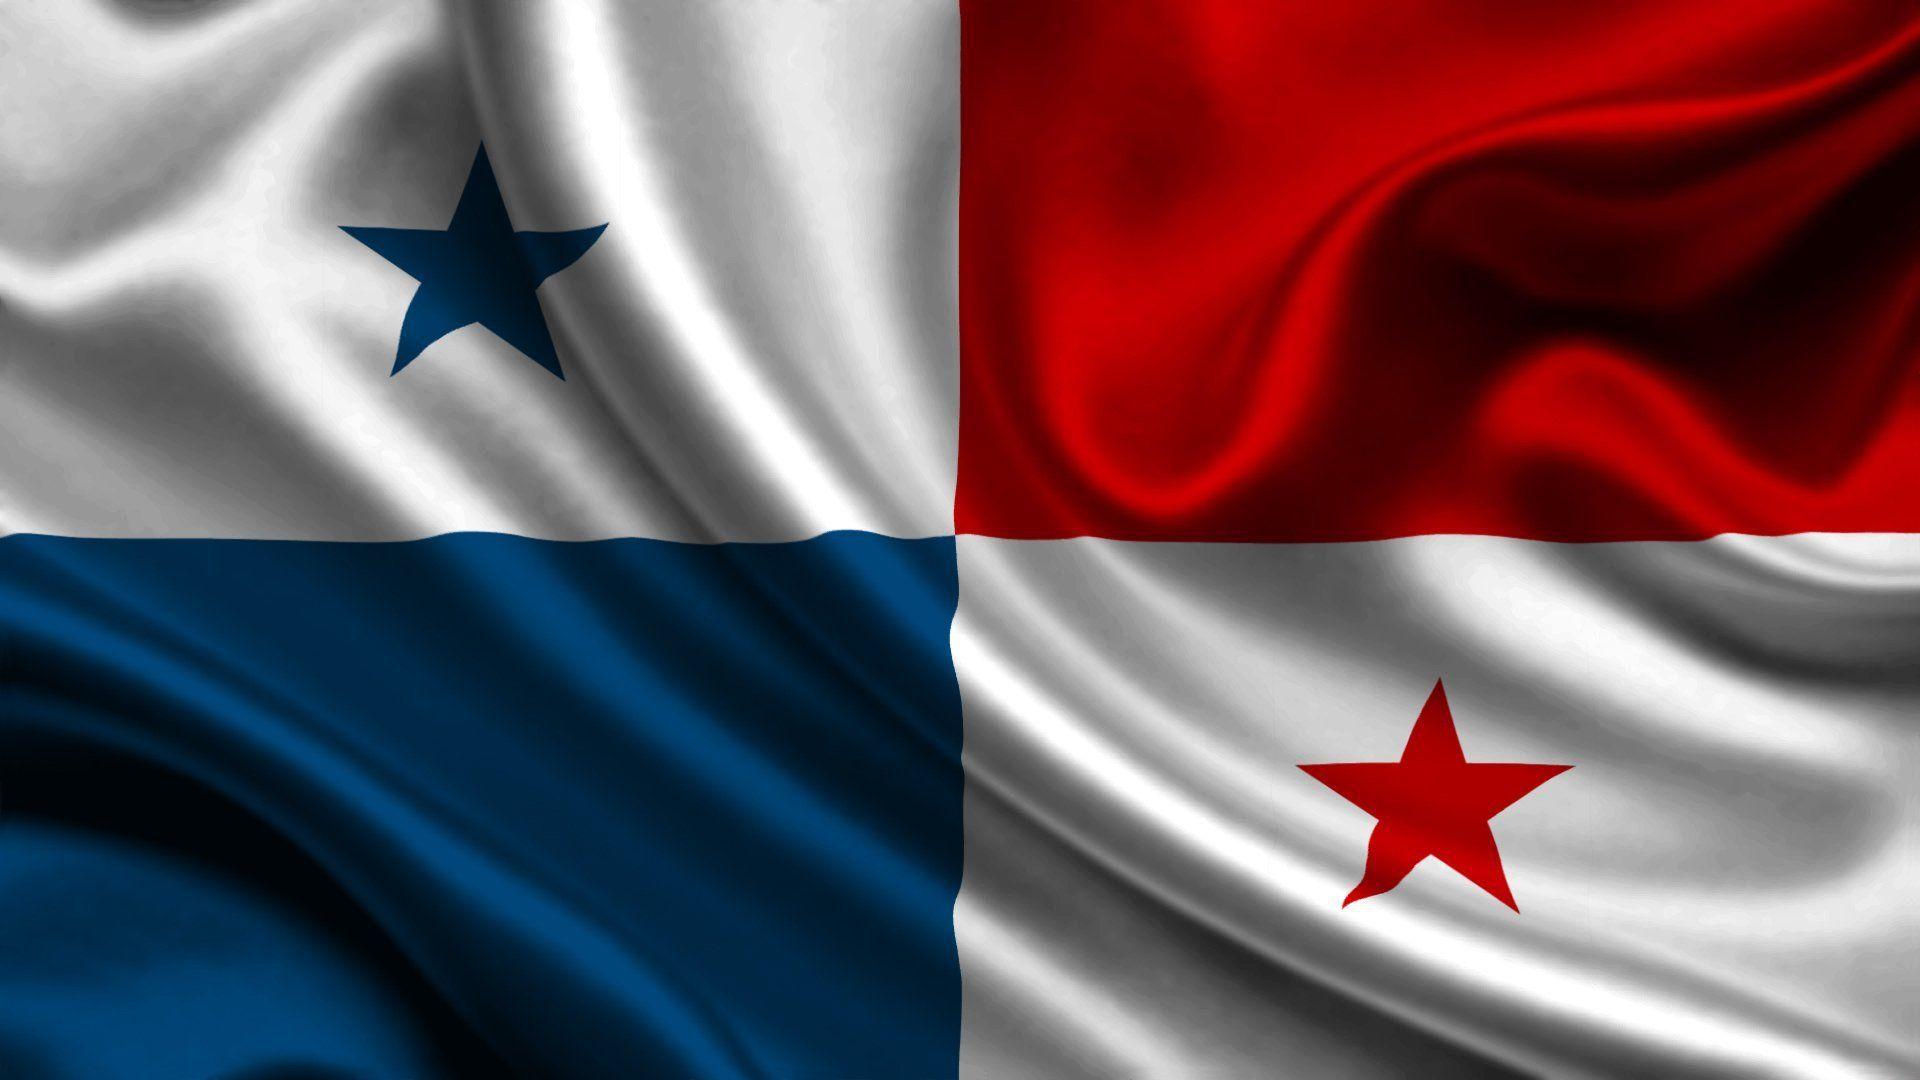 Panama Flag HD Image & Wallpaper free download